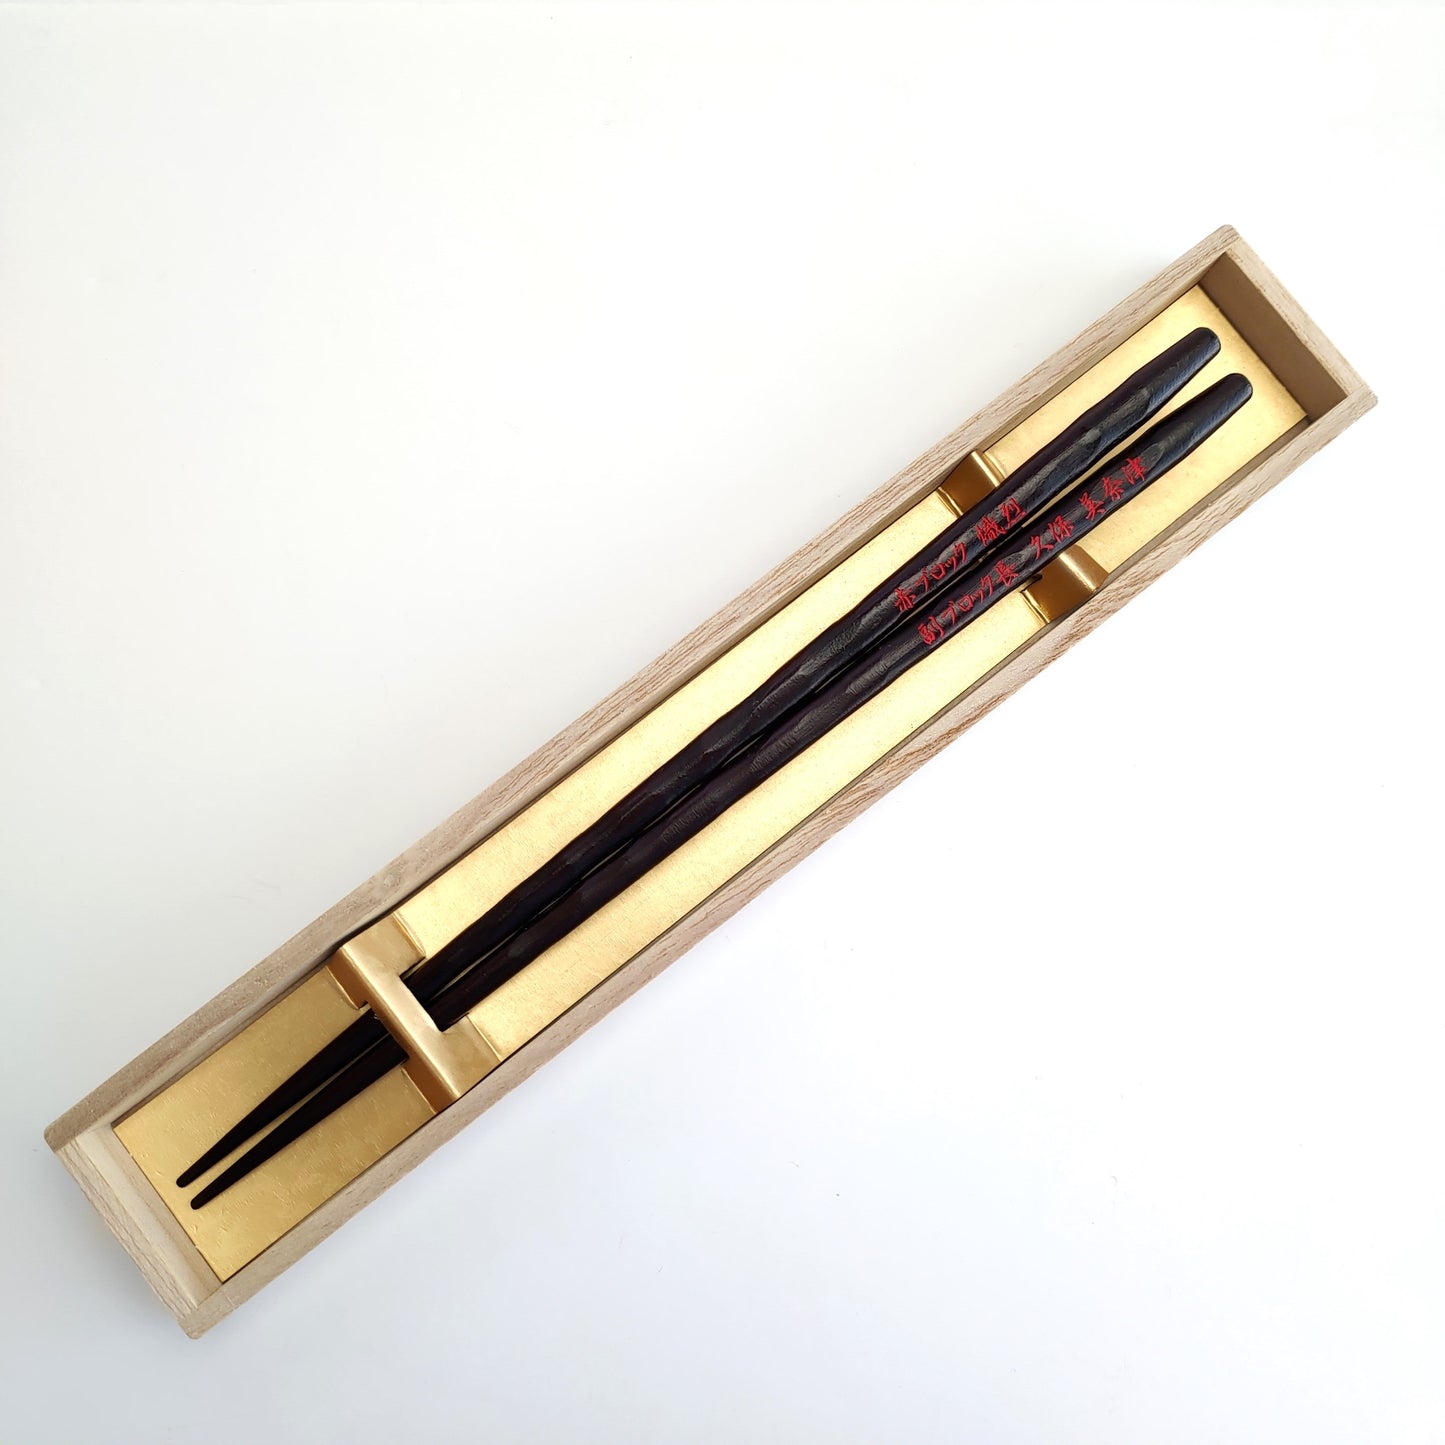 Mahana Japanese chopsticks black natural brown - SINGLE PAIR WITH ENGRAVED WOODEN BOX SET